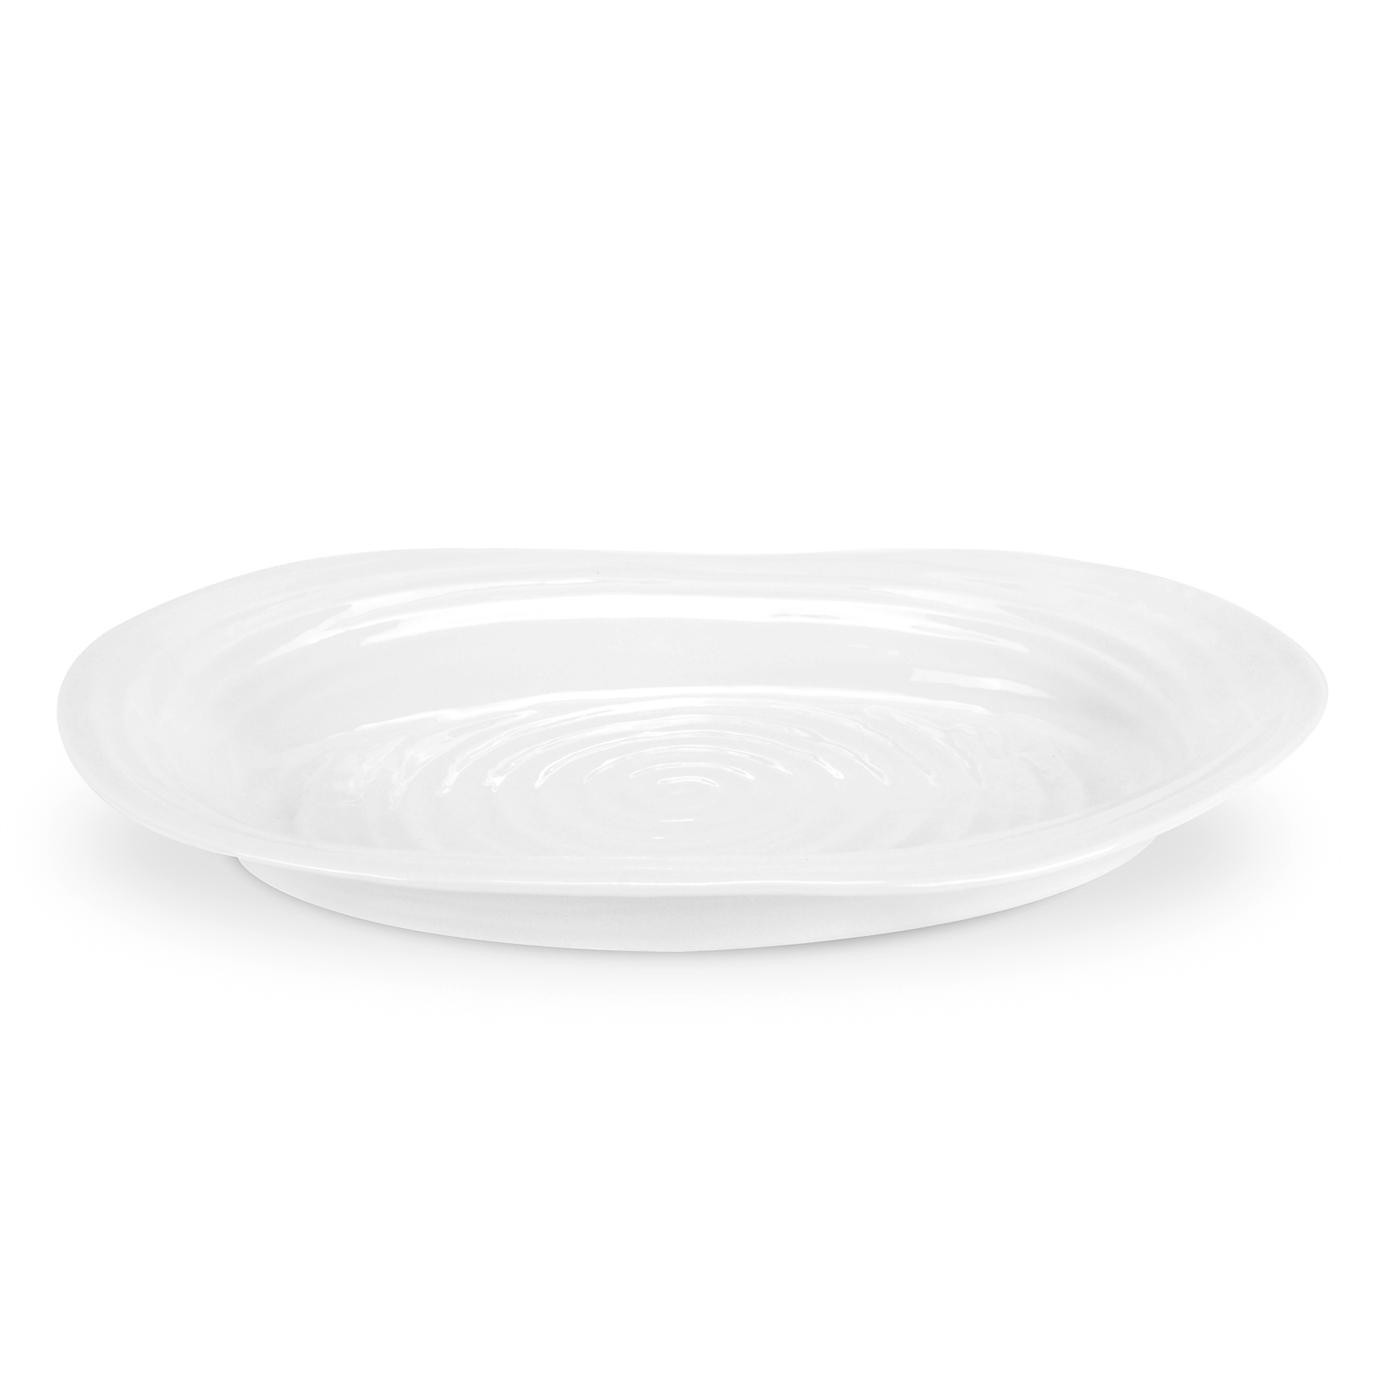 Buy the Sophie Conran For Portmeirion White Medium Oval Plate 37cm online at smithsofloughton.com